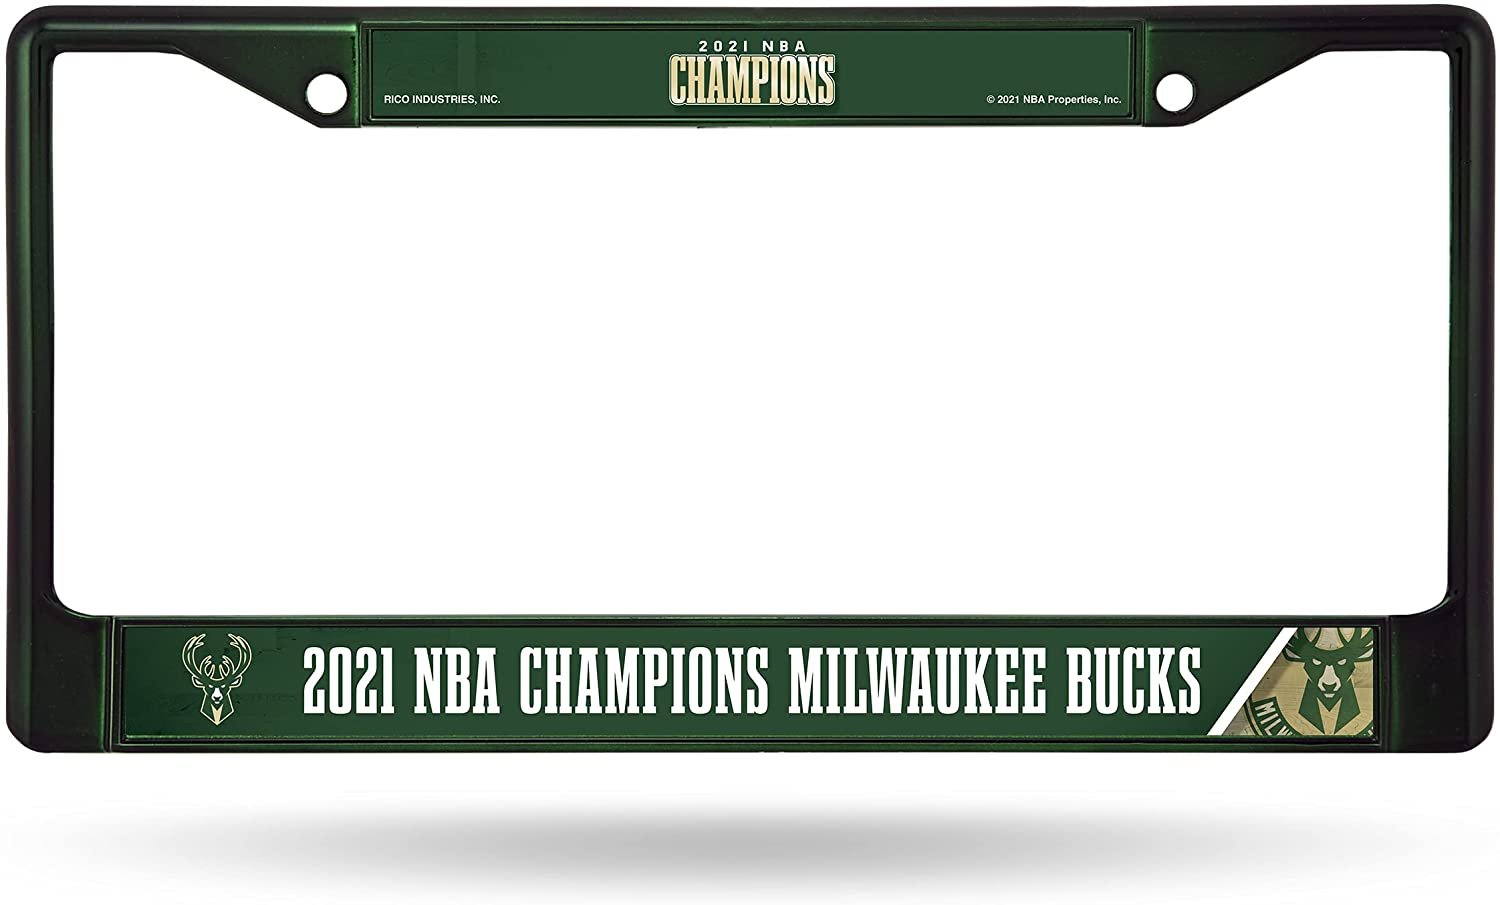 Milwaukee Bucks 2021 Champions Premium Green Metal License Plate Frame Tag Cover, 12x6 Inch